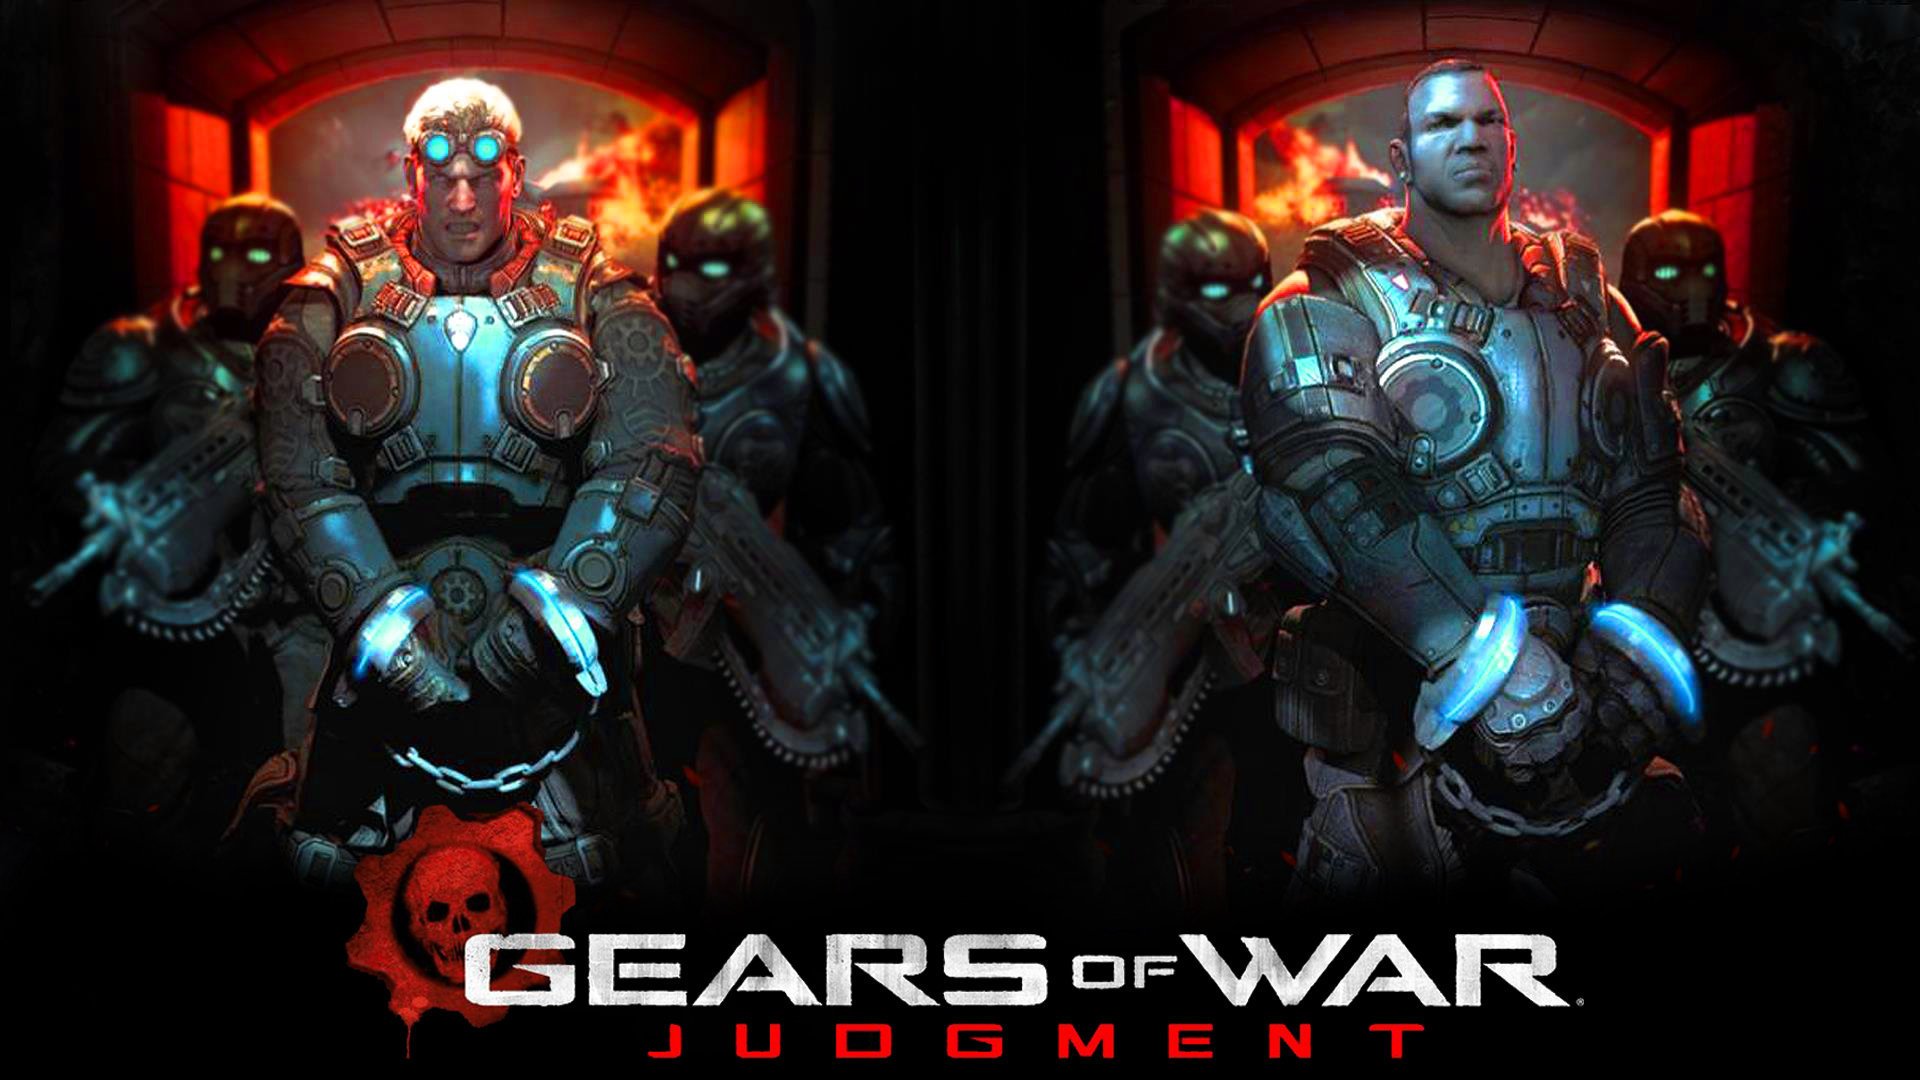 Gears of War Judgement   Xbox 360   Nerd Bacon Reviews